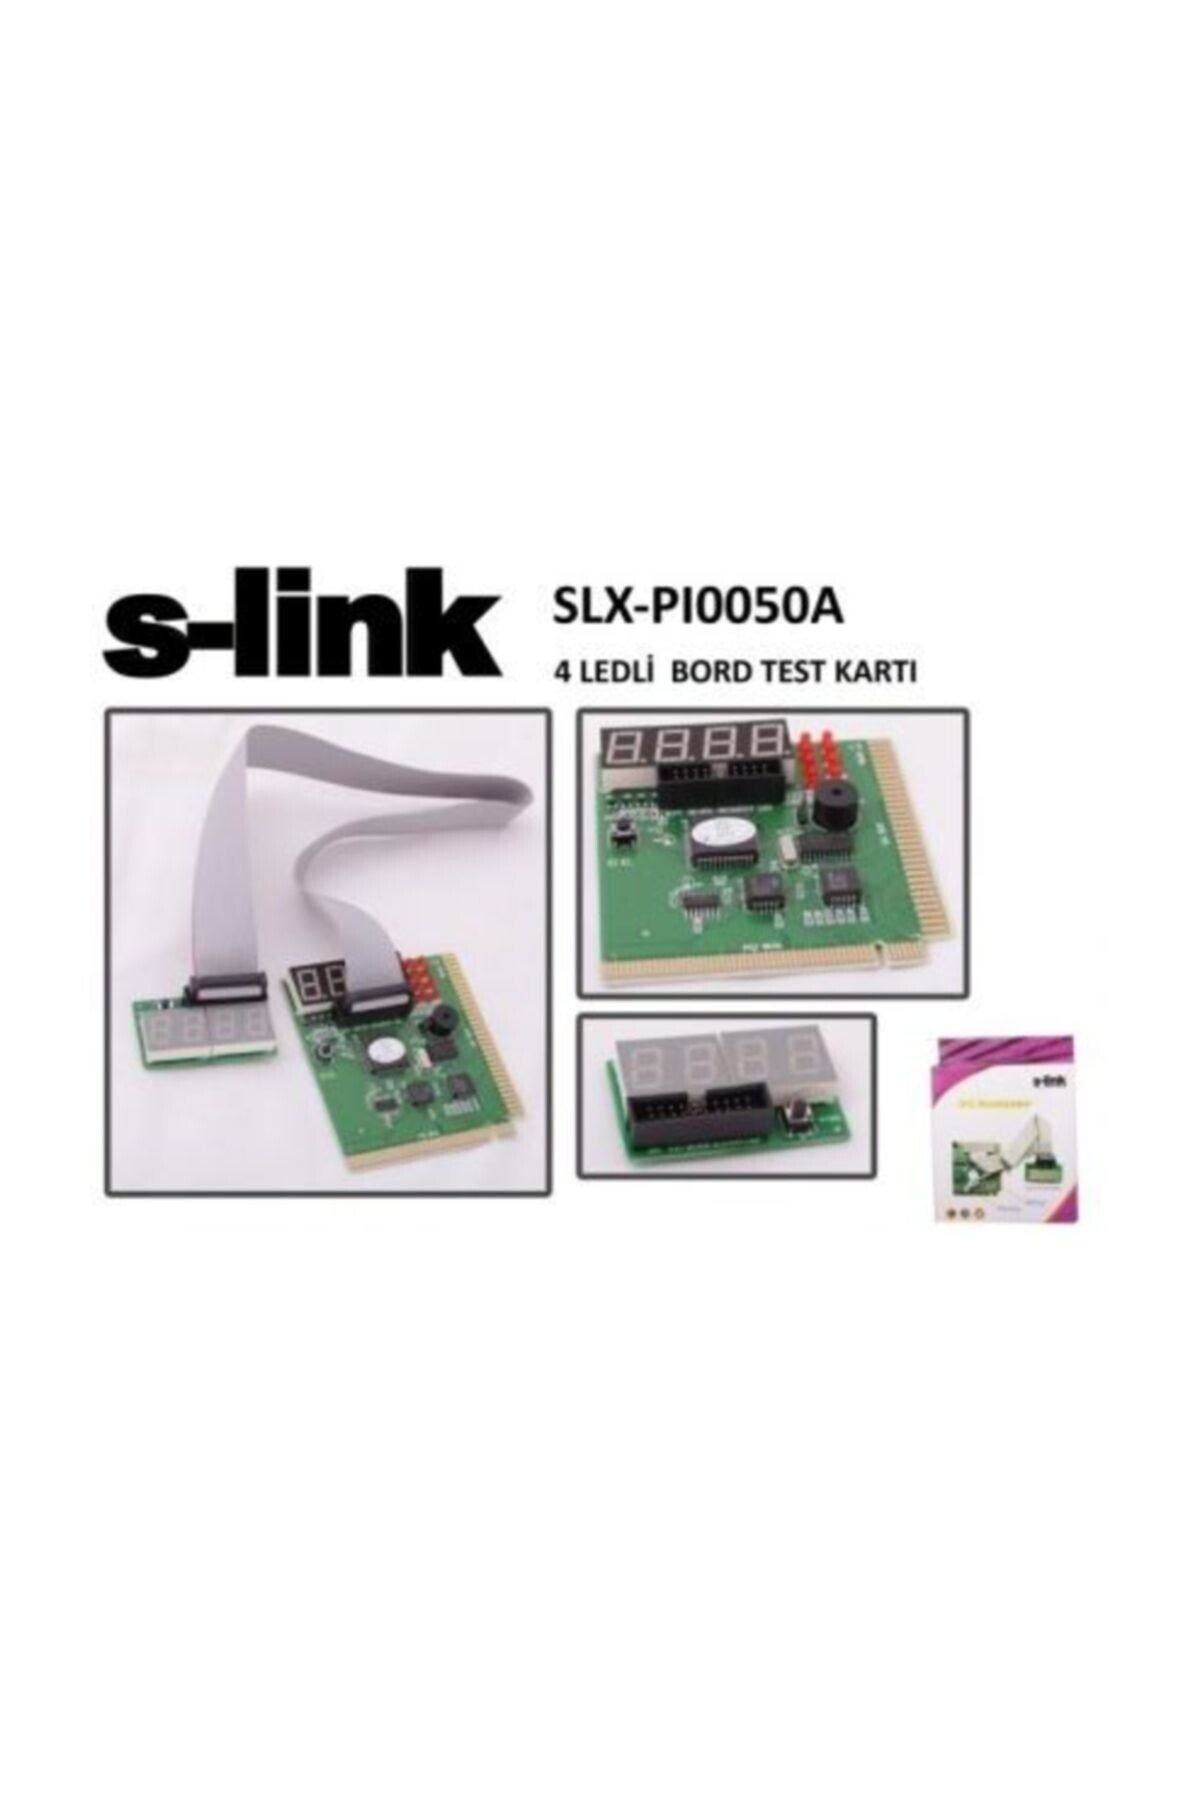 S-Link Slx-pı0050a 4 Ledli Board Test Kartı